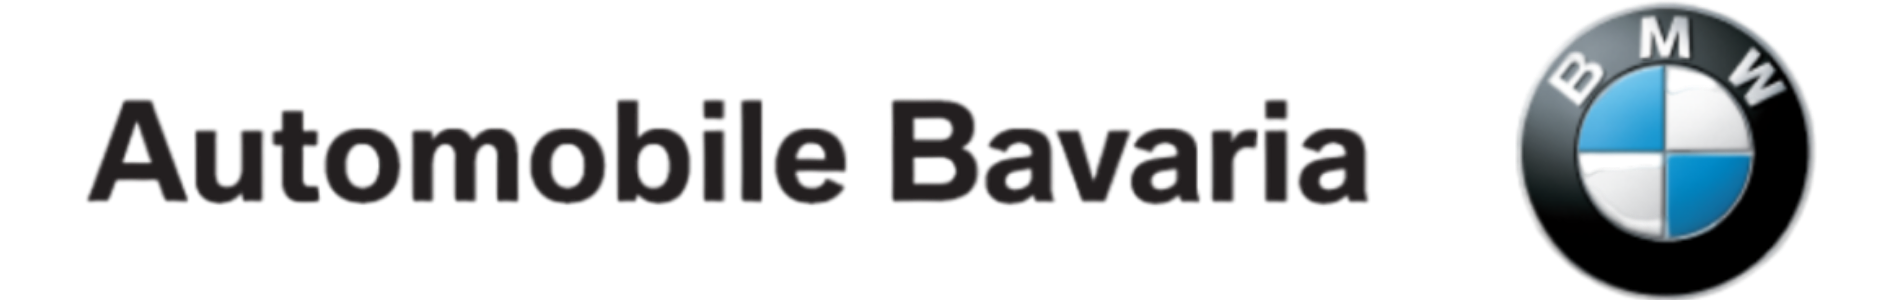 automobile Bavaria logo